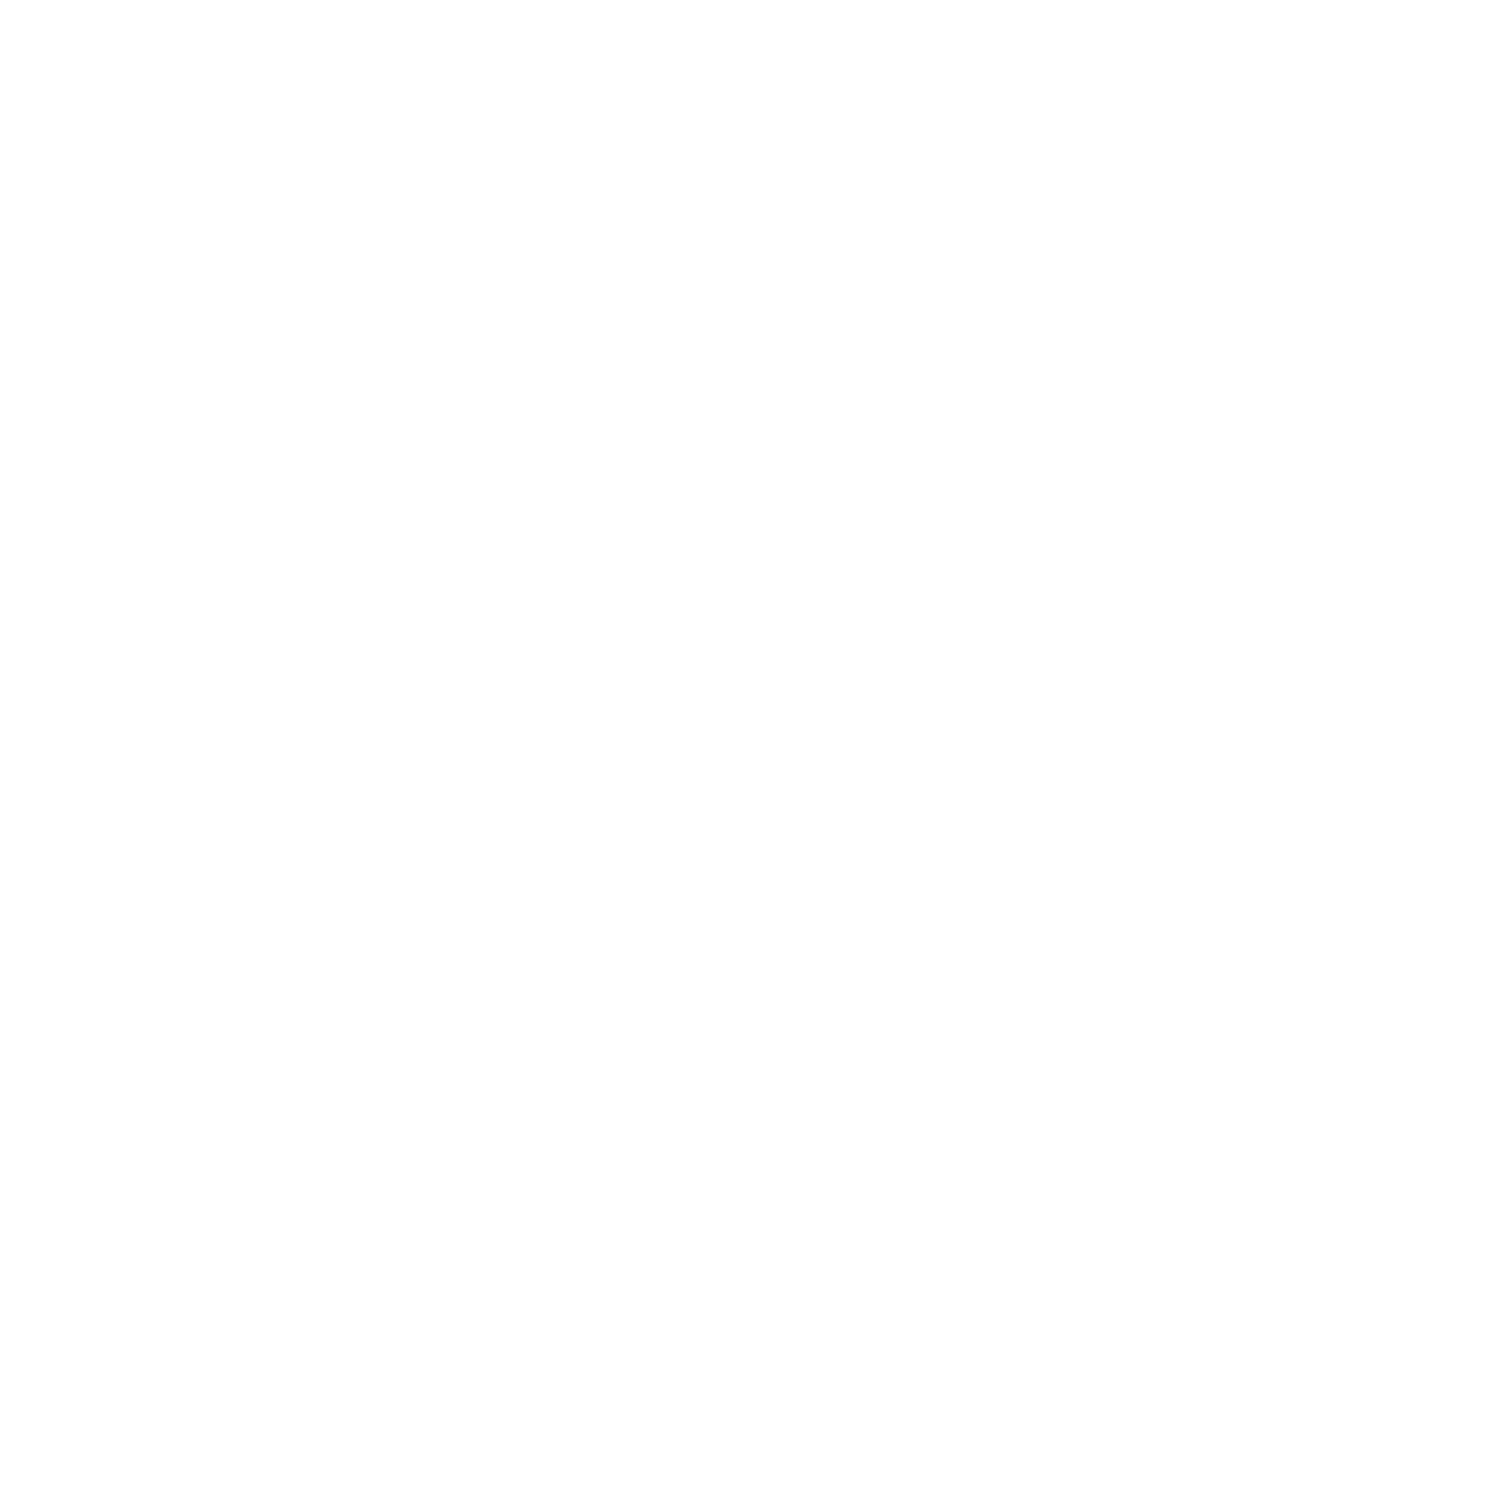 Caan Rose Estates Ltd - Slough : Letting agents in Egham Surrey